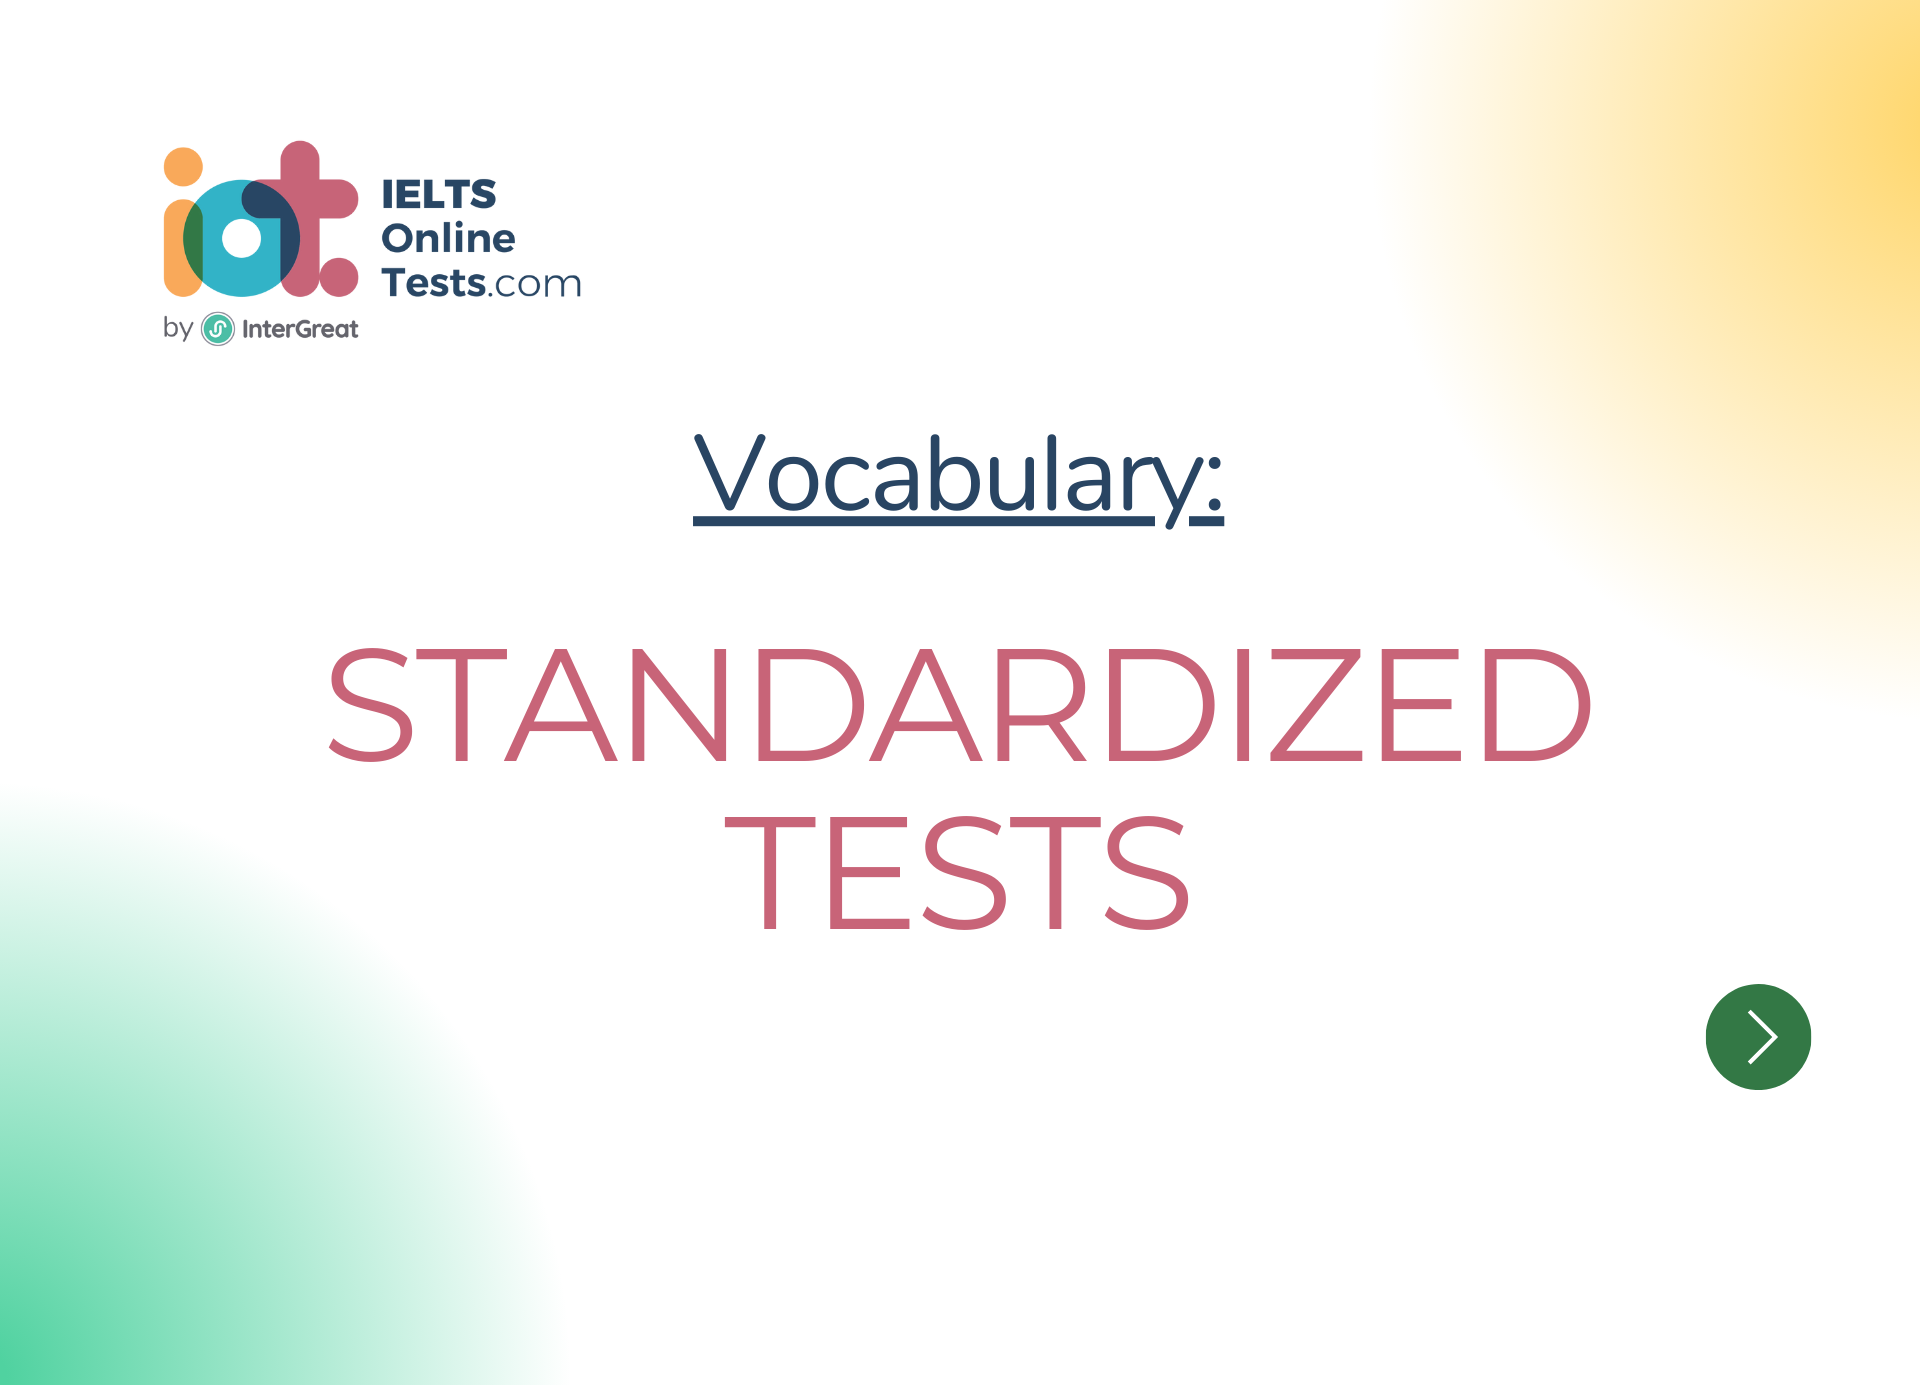 Kỳ thi chuẩn hóa (Standardized tests)